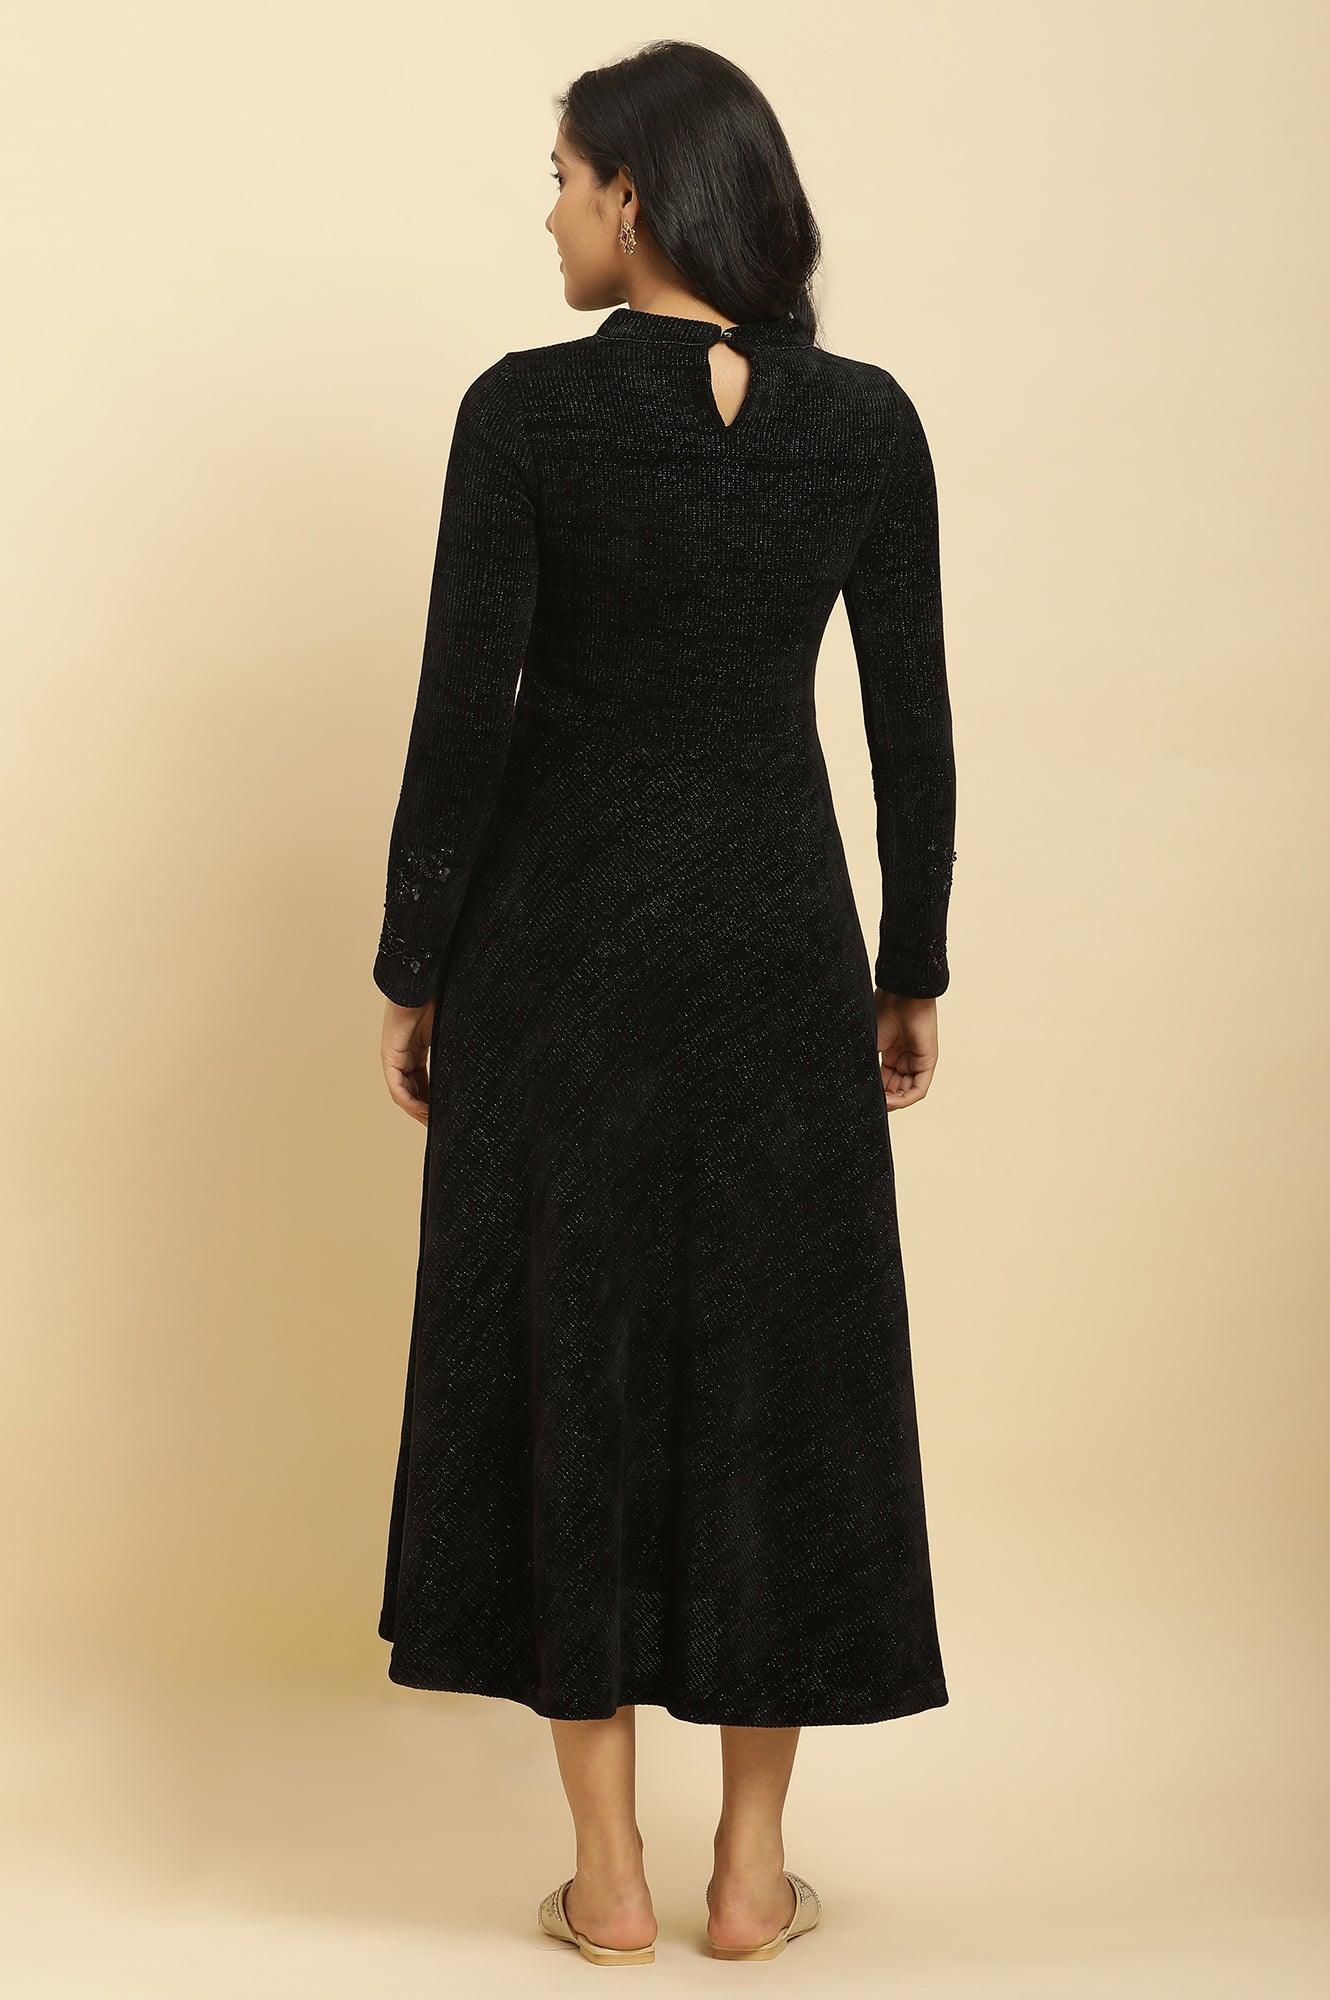 Black Knitted Circular Flared Winter Dress - wforwoman